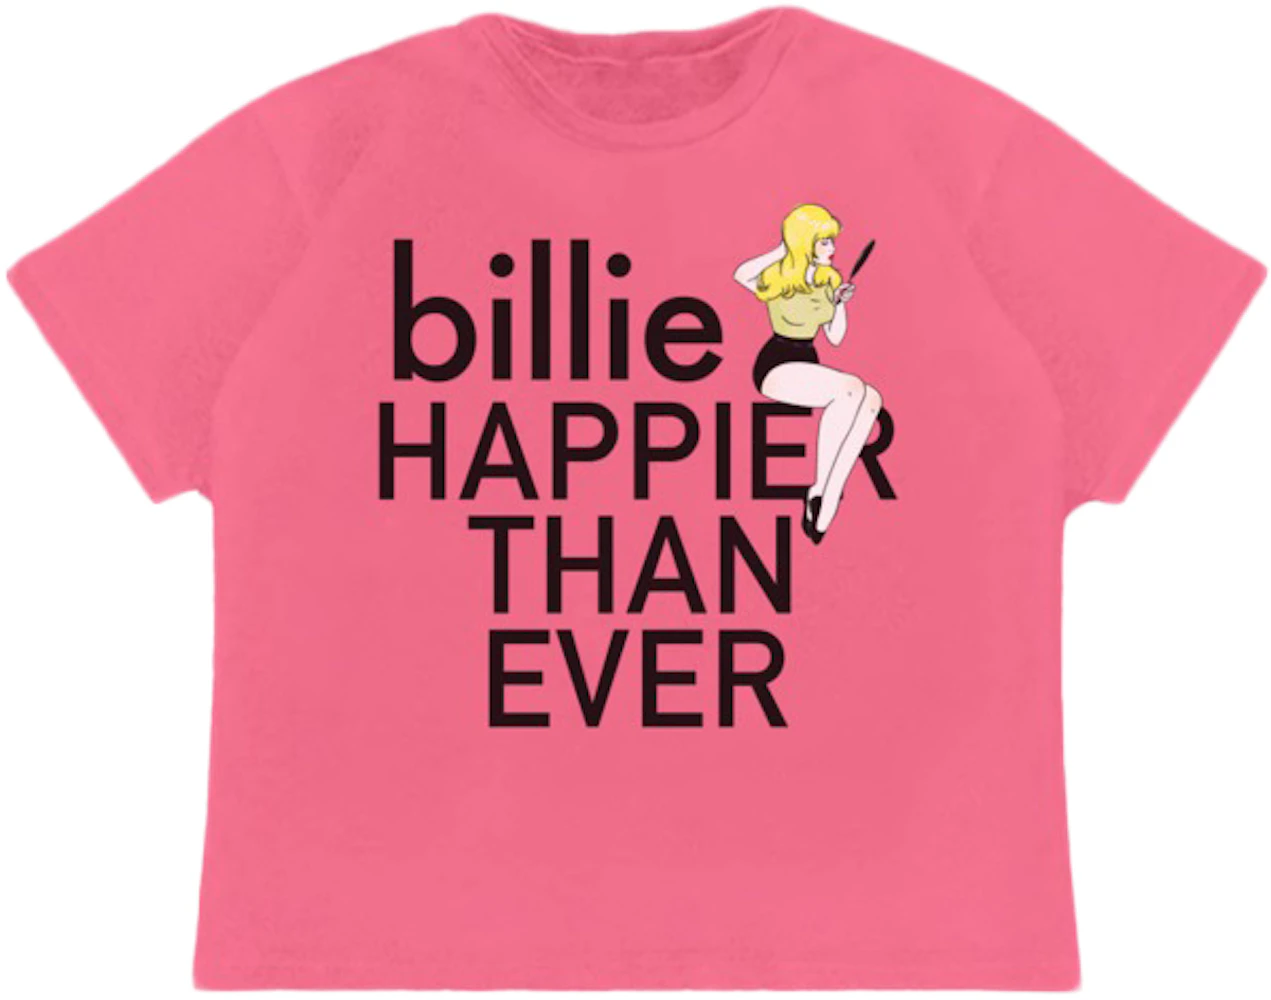 Billie Eilish Pretty Boy T-shirt Pink - SS21 - US